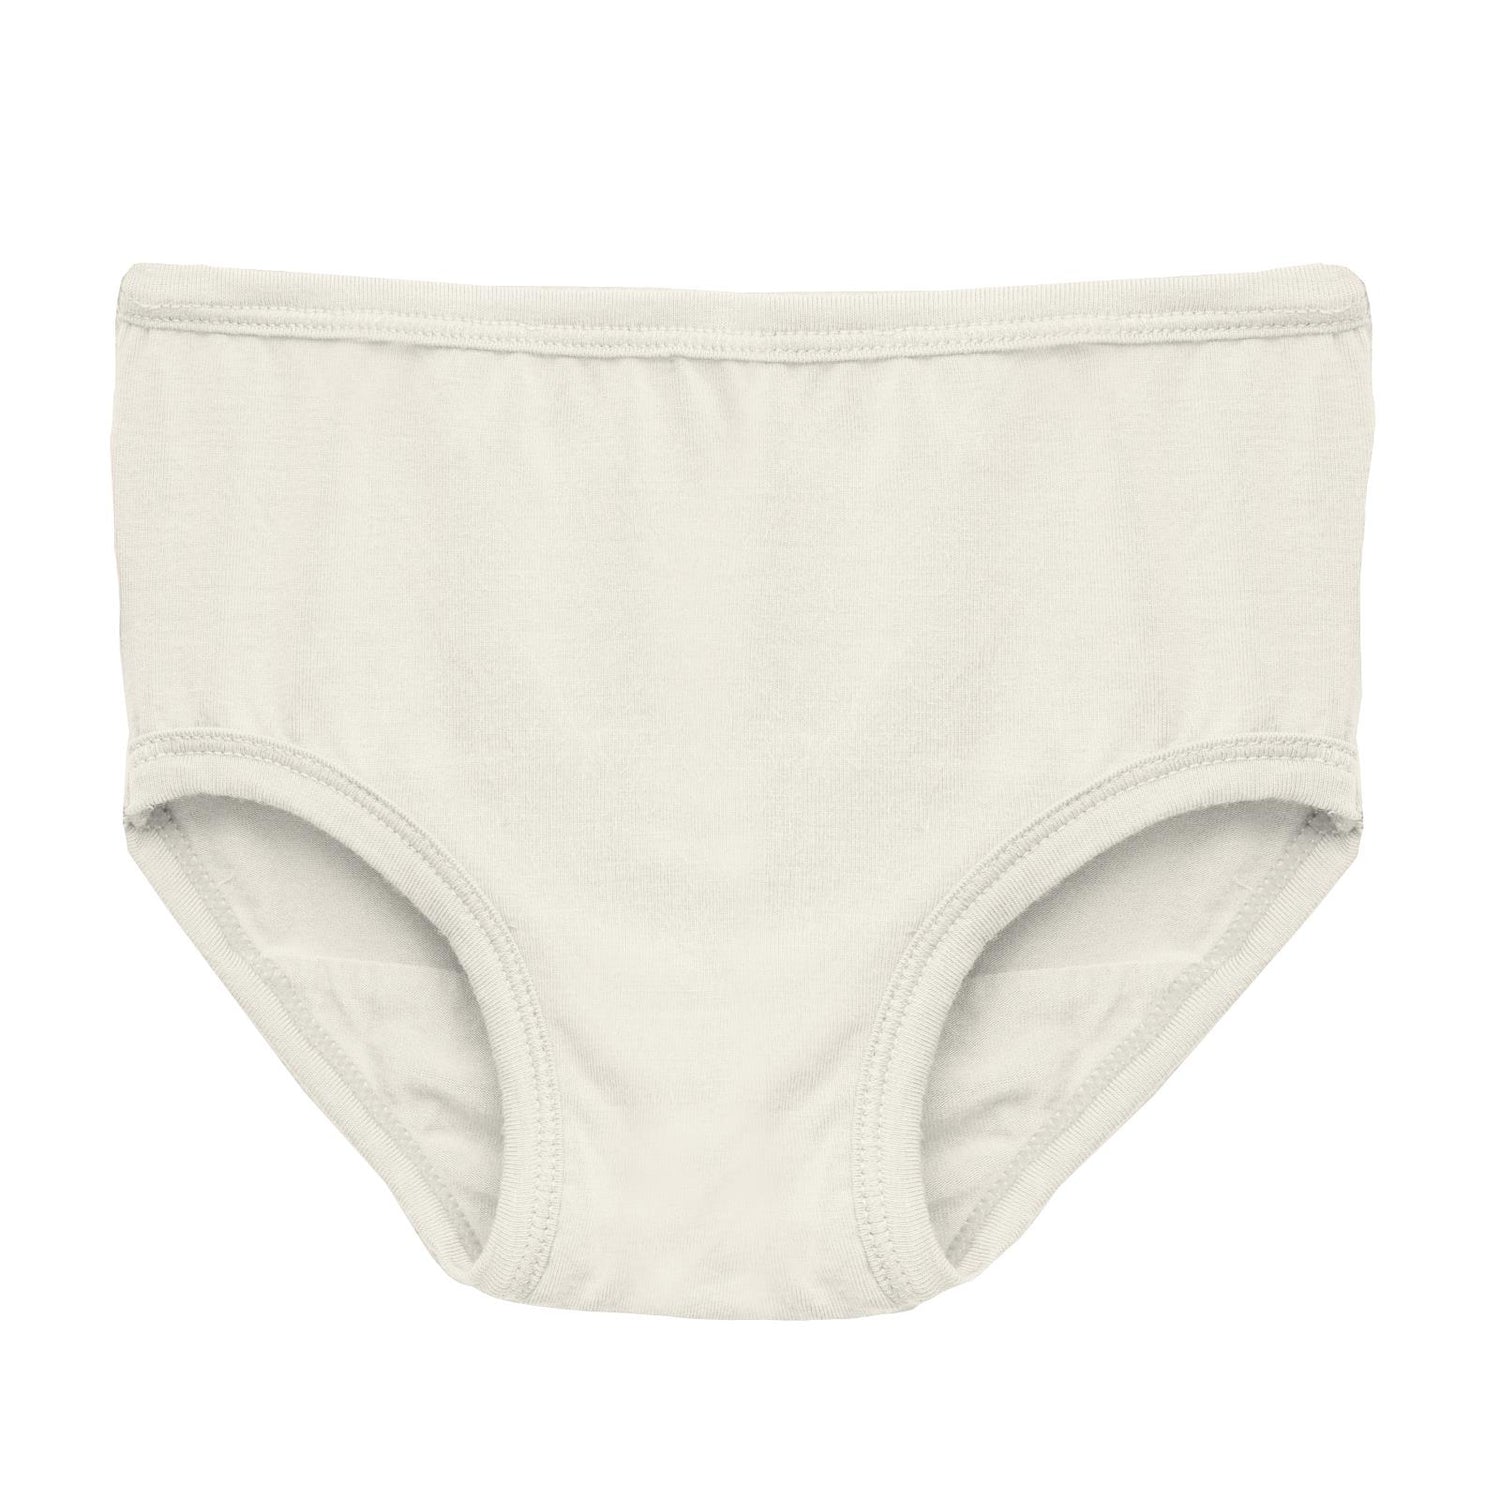 Print Underwear Set of 3 in Beach Day Stripe, Natural and Summer Sky Plumeria